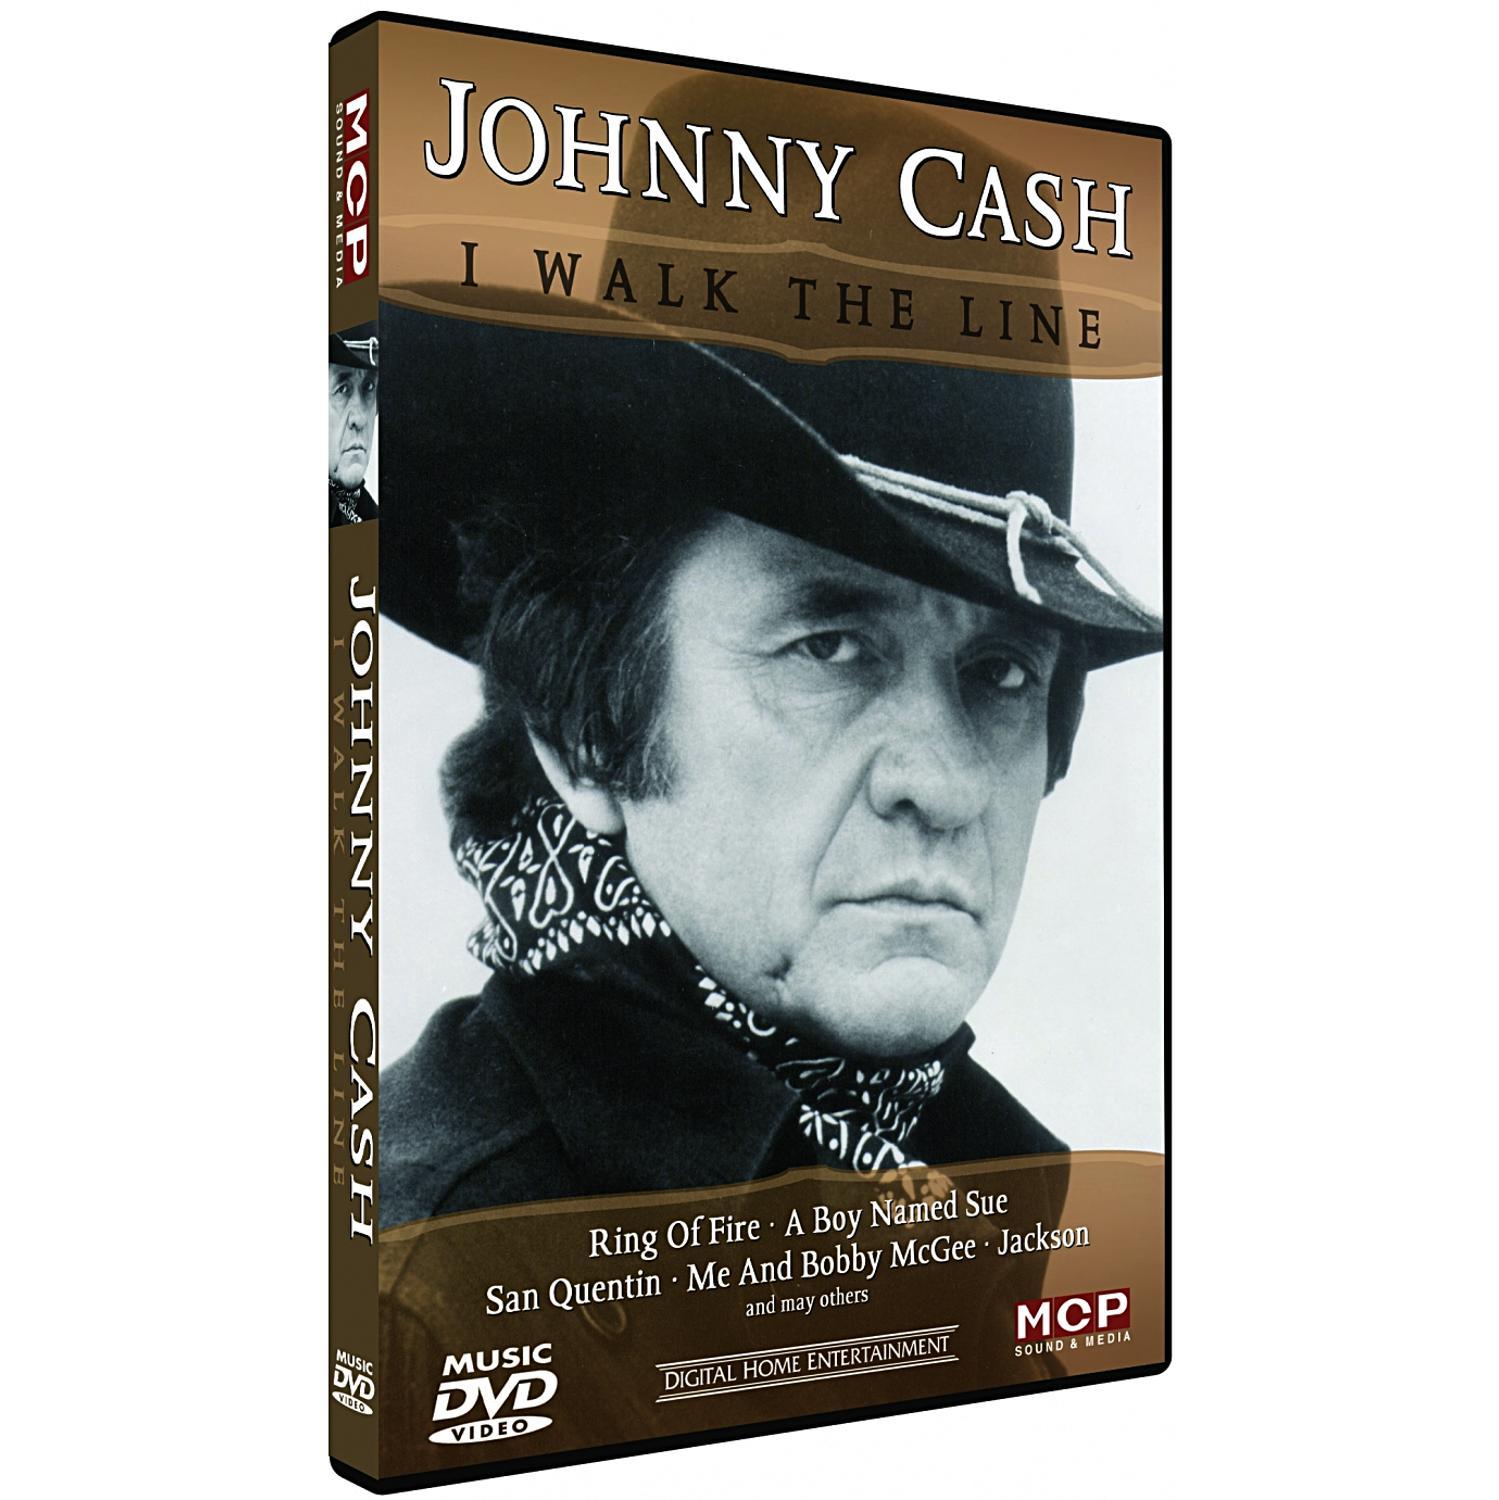 Johnny Cash - I Walk Line (DVD) The 